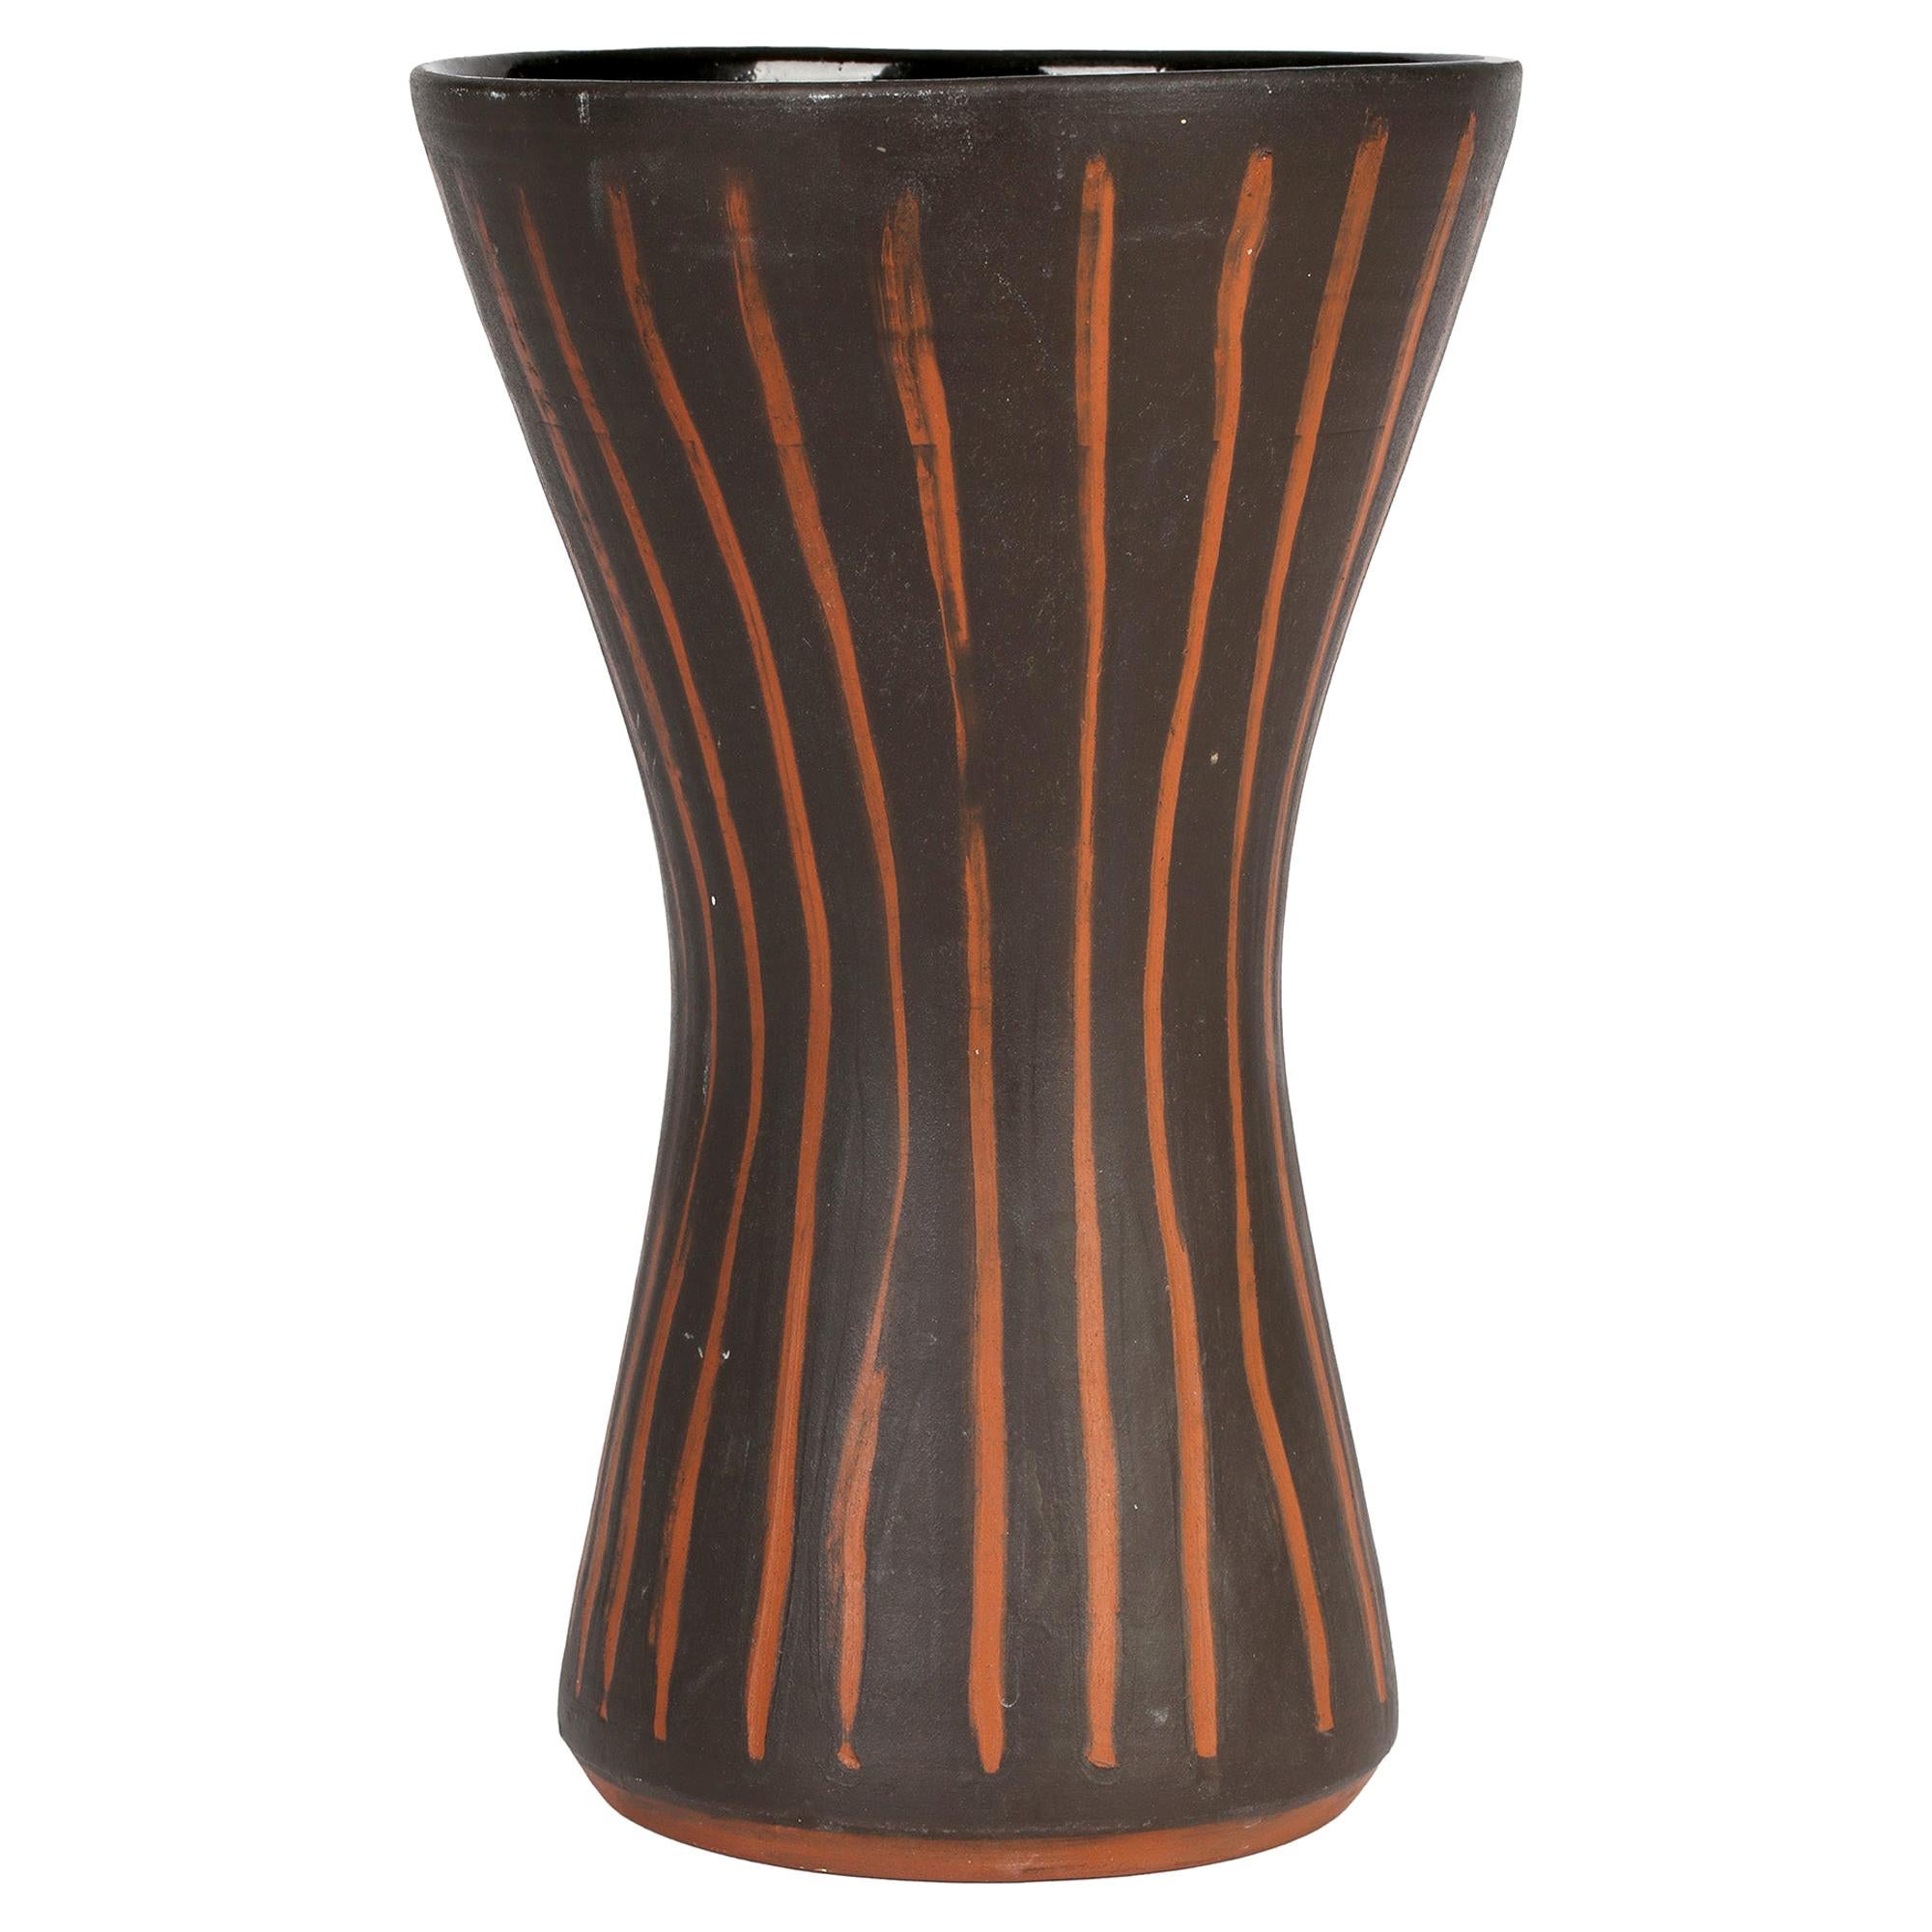 David Leach Vertical Line Design Large Studio Pottery Vase